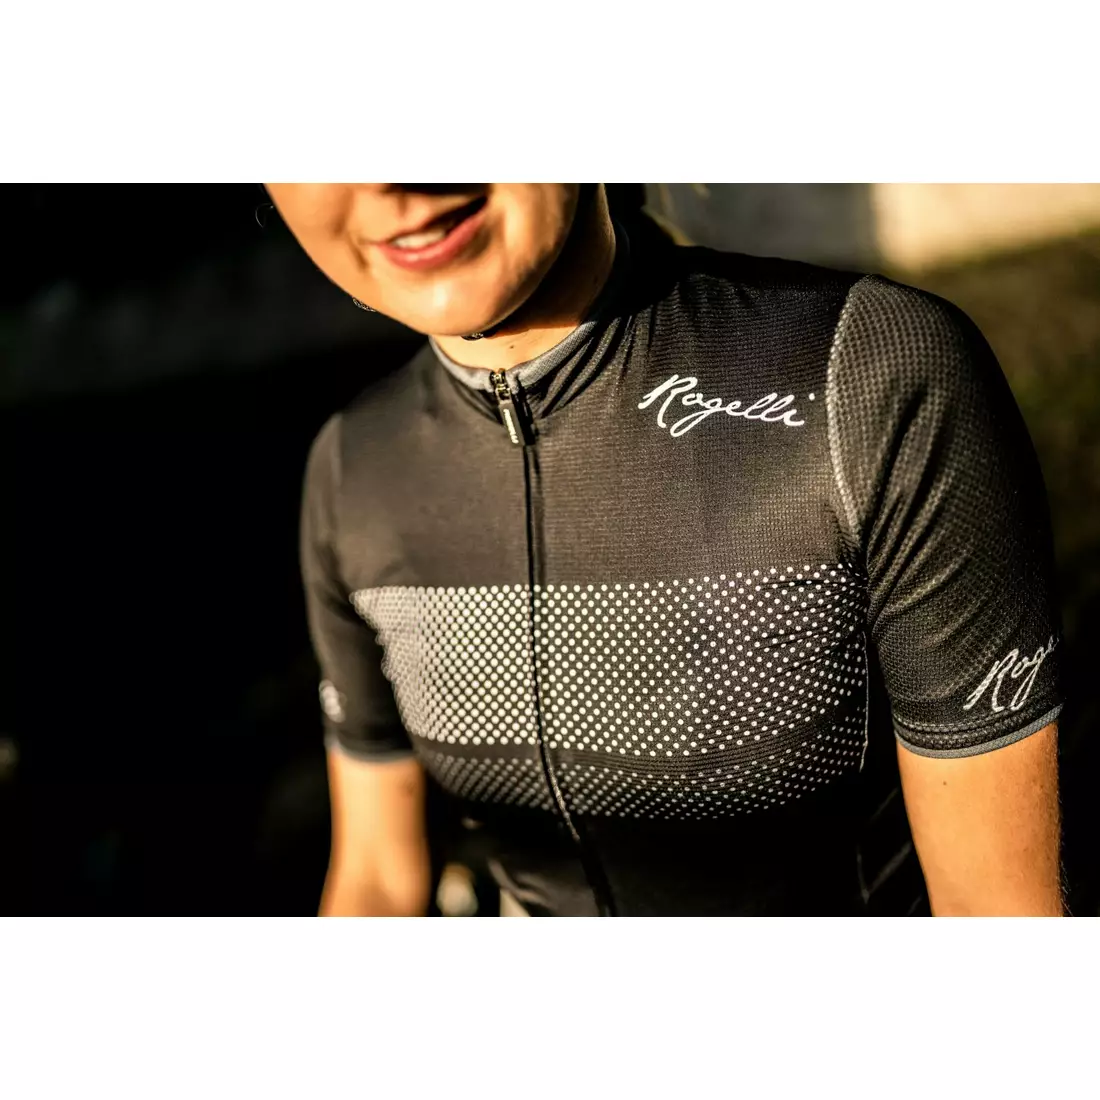 ROGELLI tricou de ciclism feminin PURPOSE black 010.088